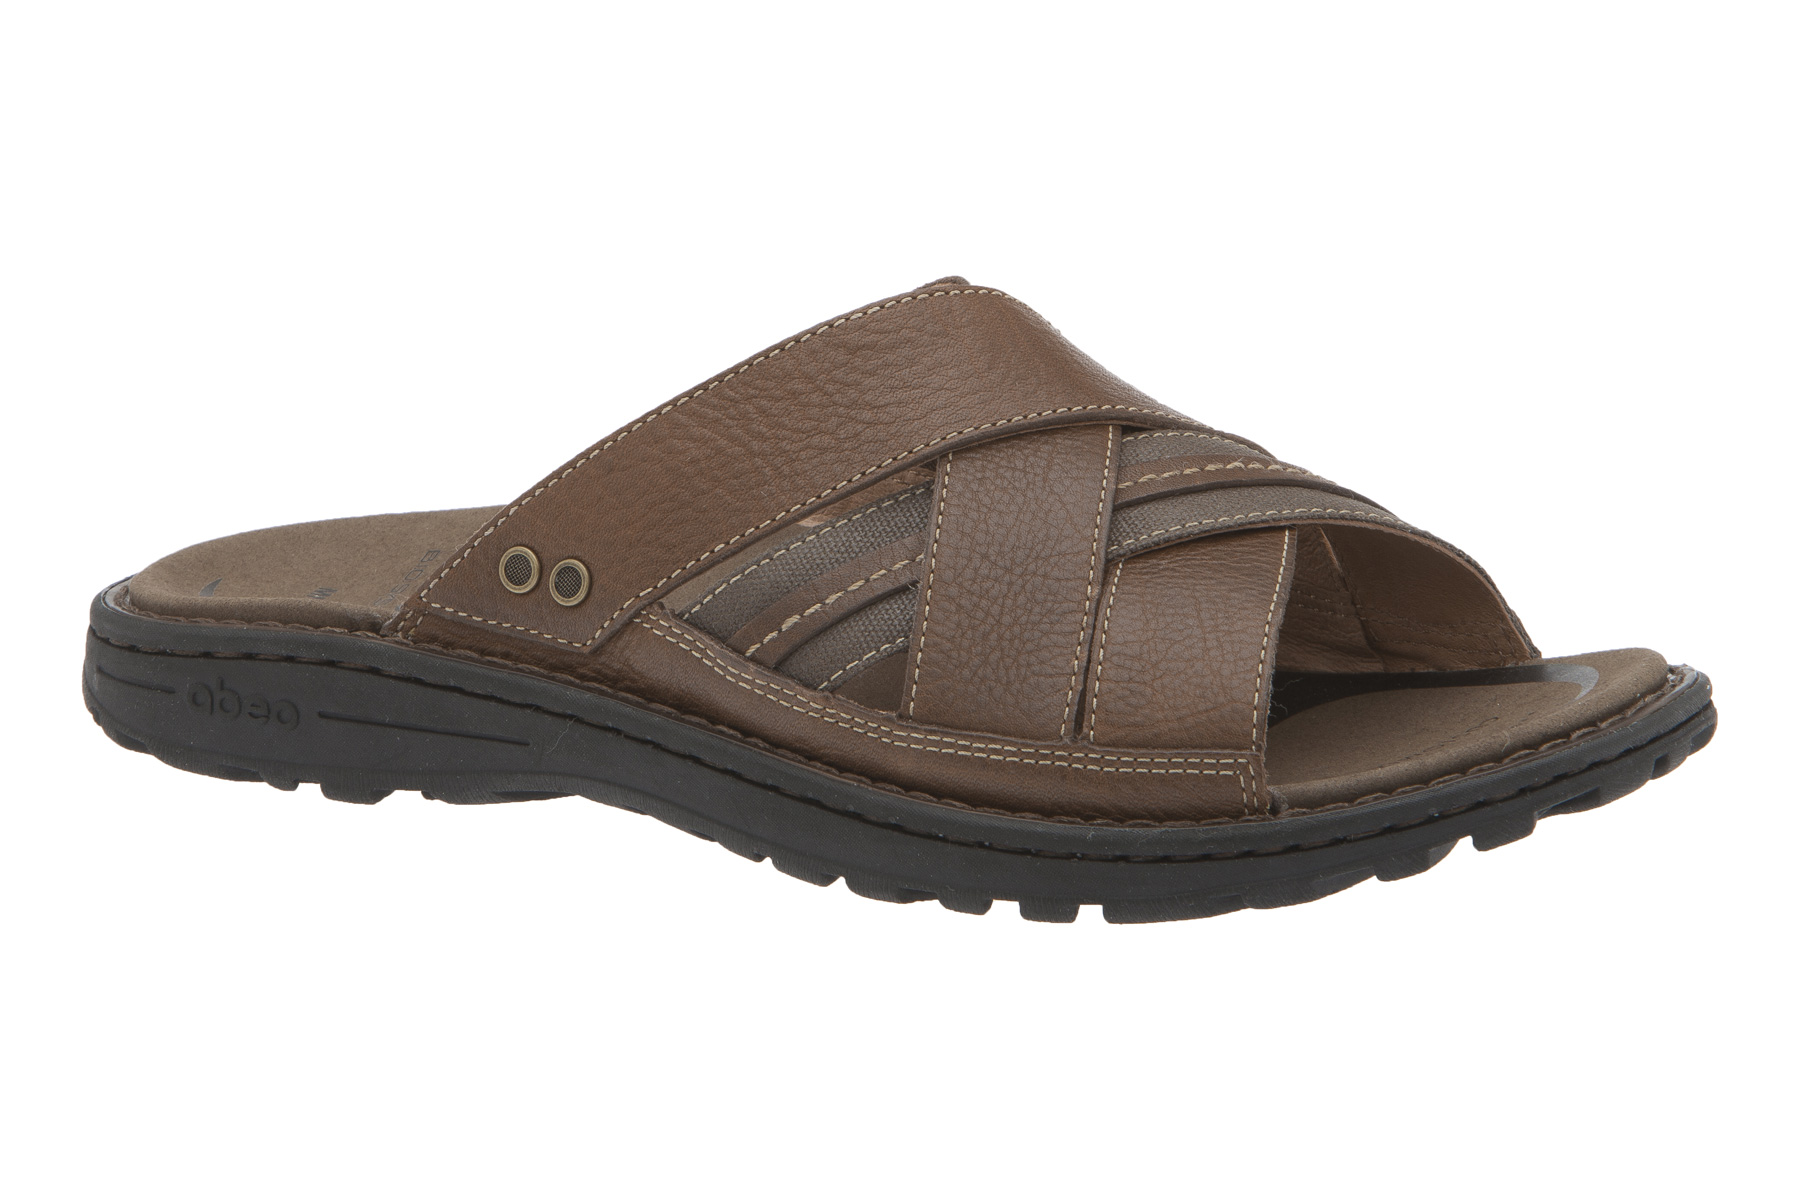 ABEO Brant Neutral - Low Heel Sandals in Brown - Walmart.com